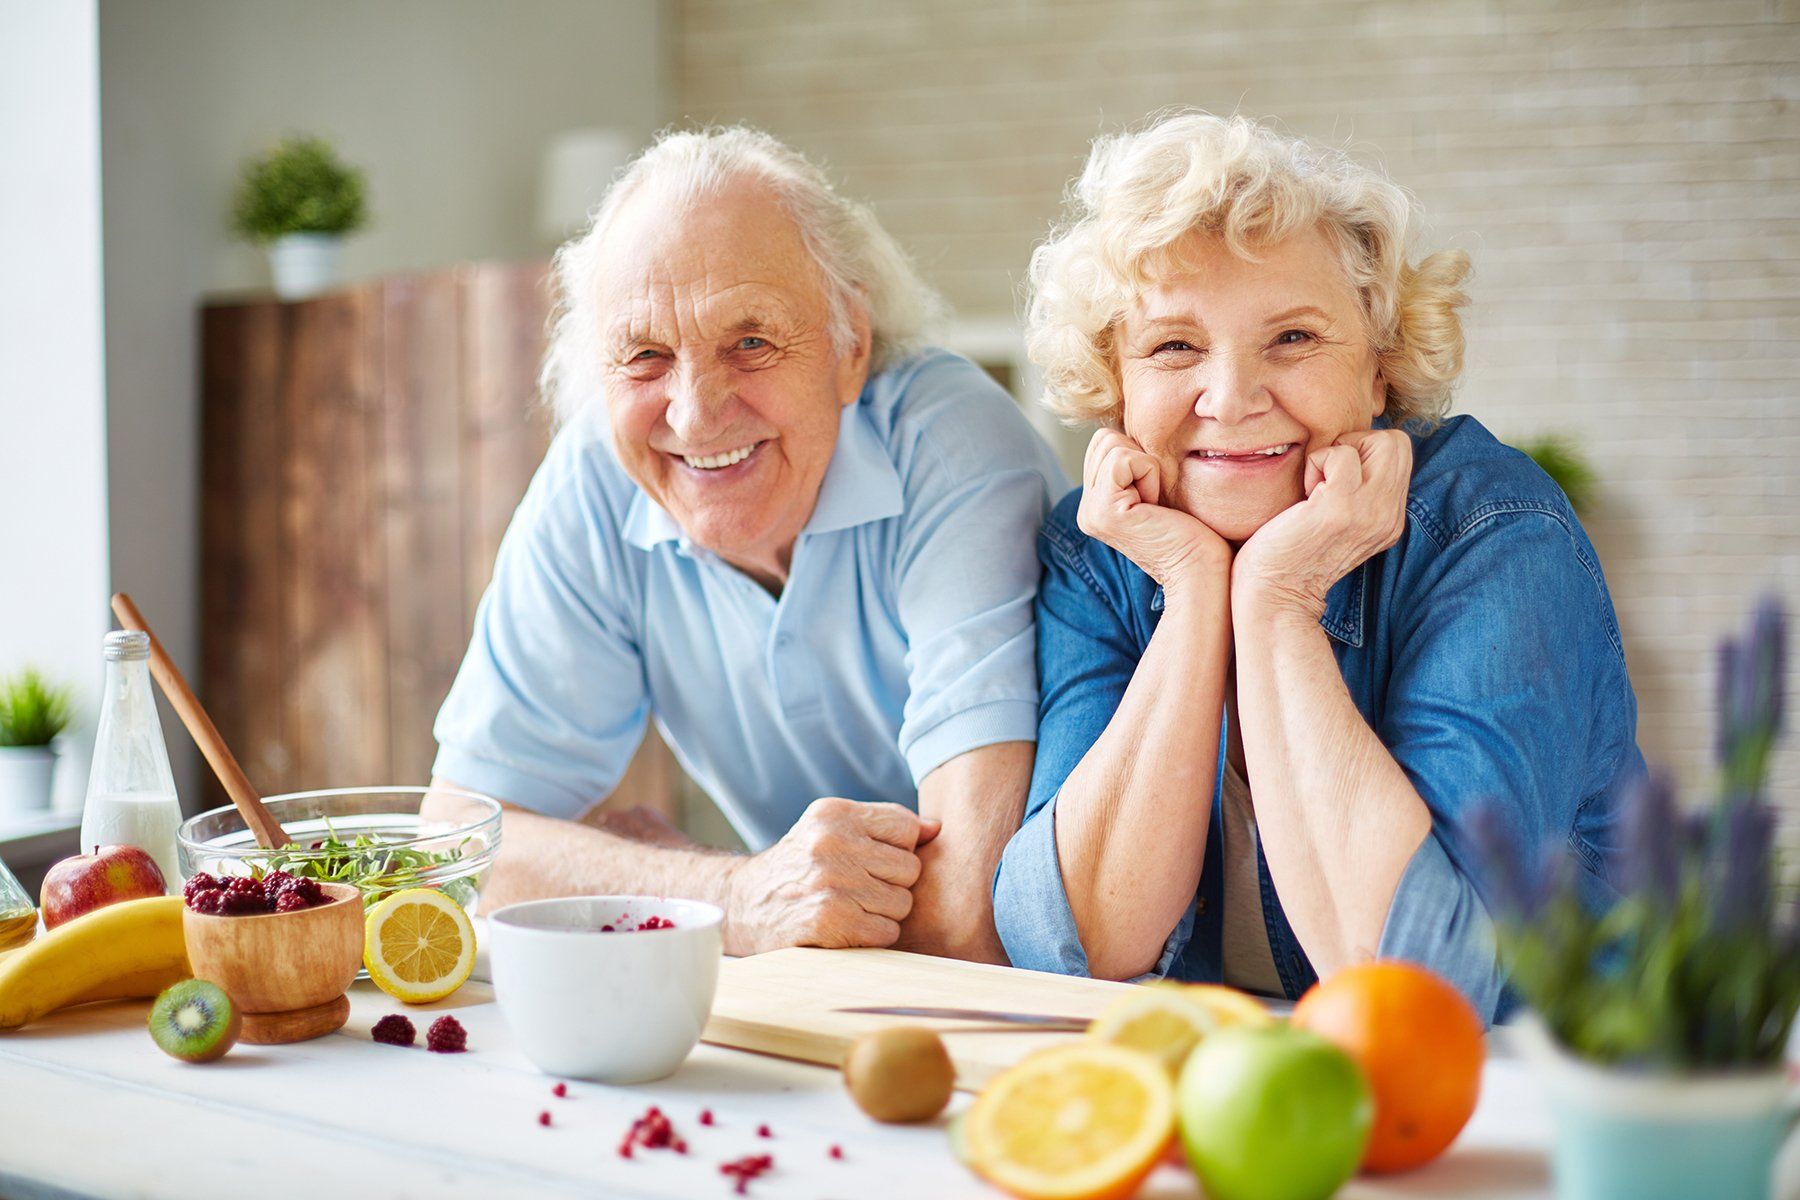 Senior couple in kitchen environment smiling at camera.